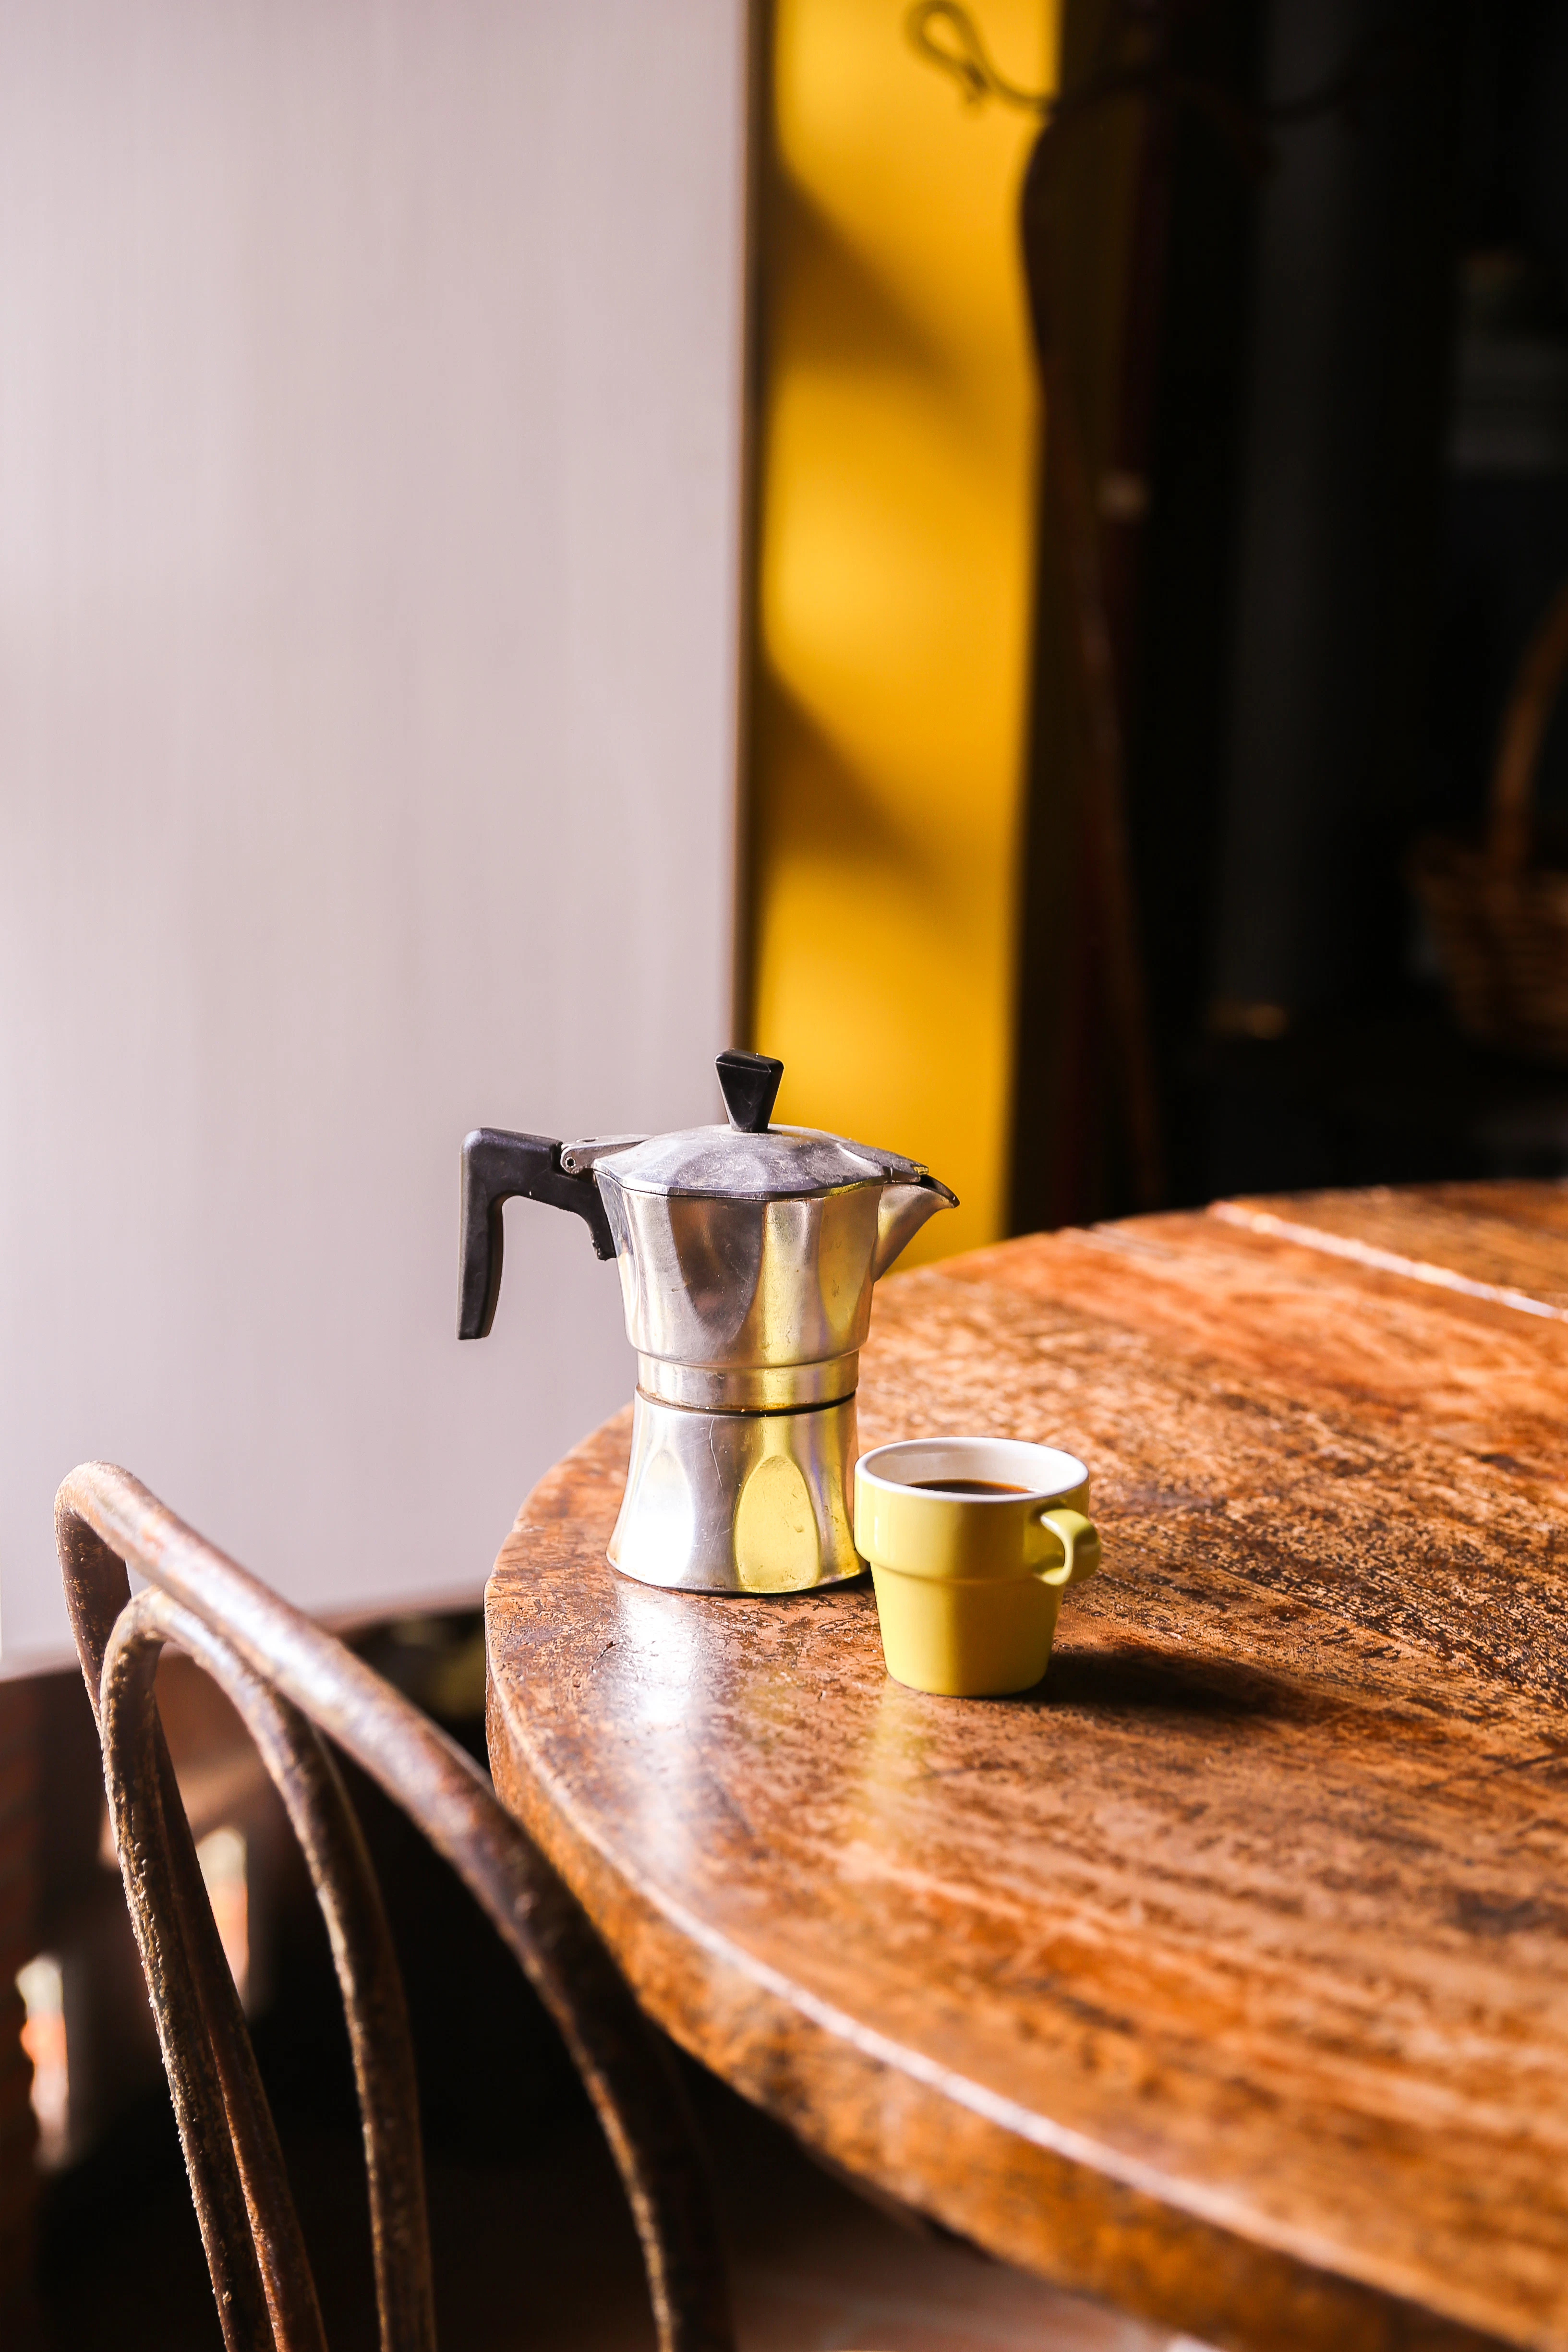 A moka pot next to an espresso cup on a table.